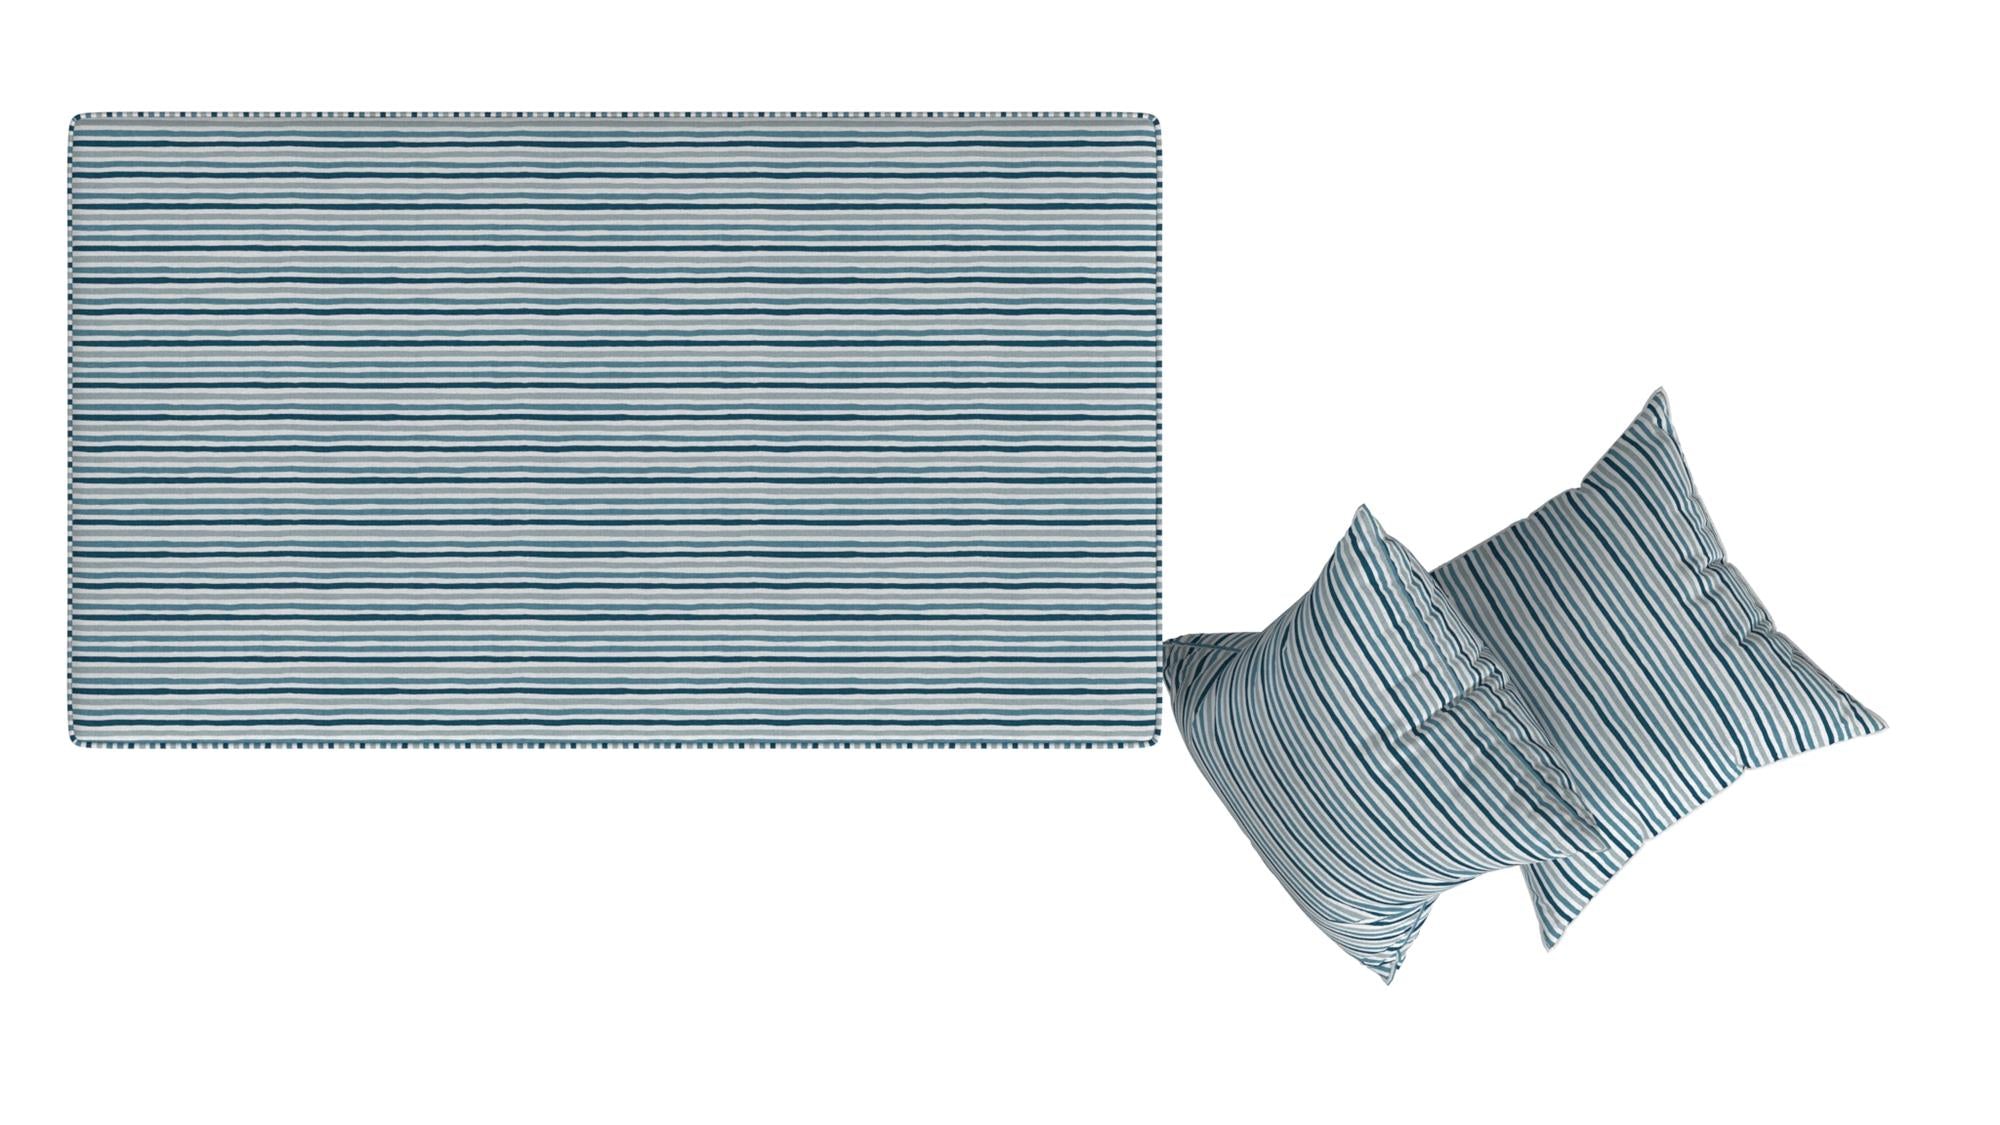  Bleeker Rectangular Storage Ottoman and 2 Pillows Set - Multi Blue Painted Stripe - N/A